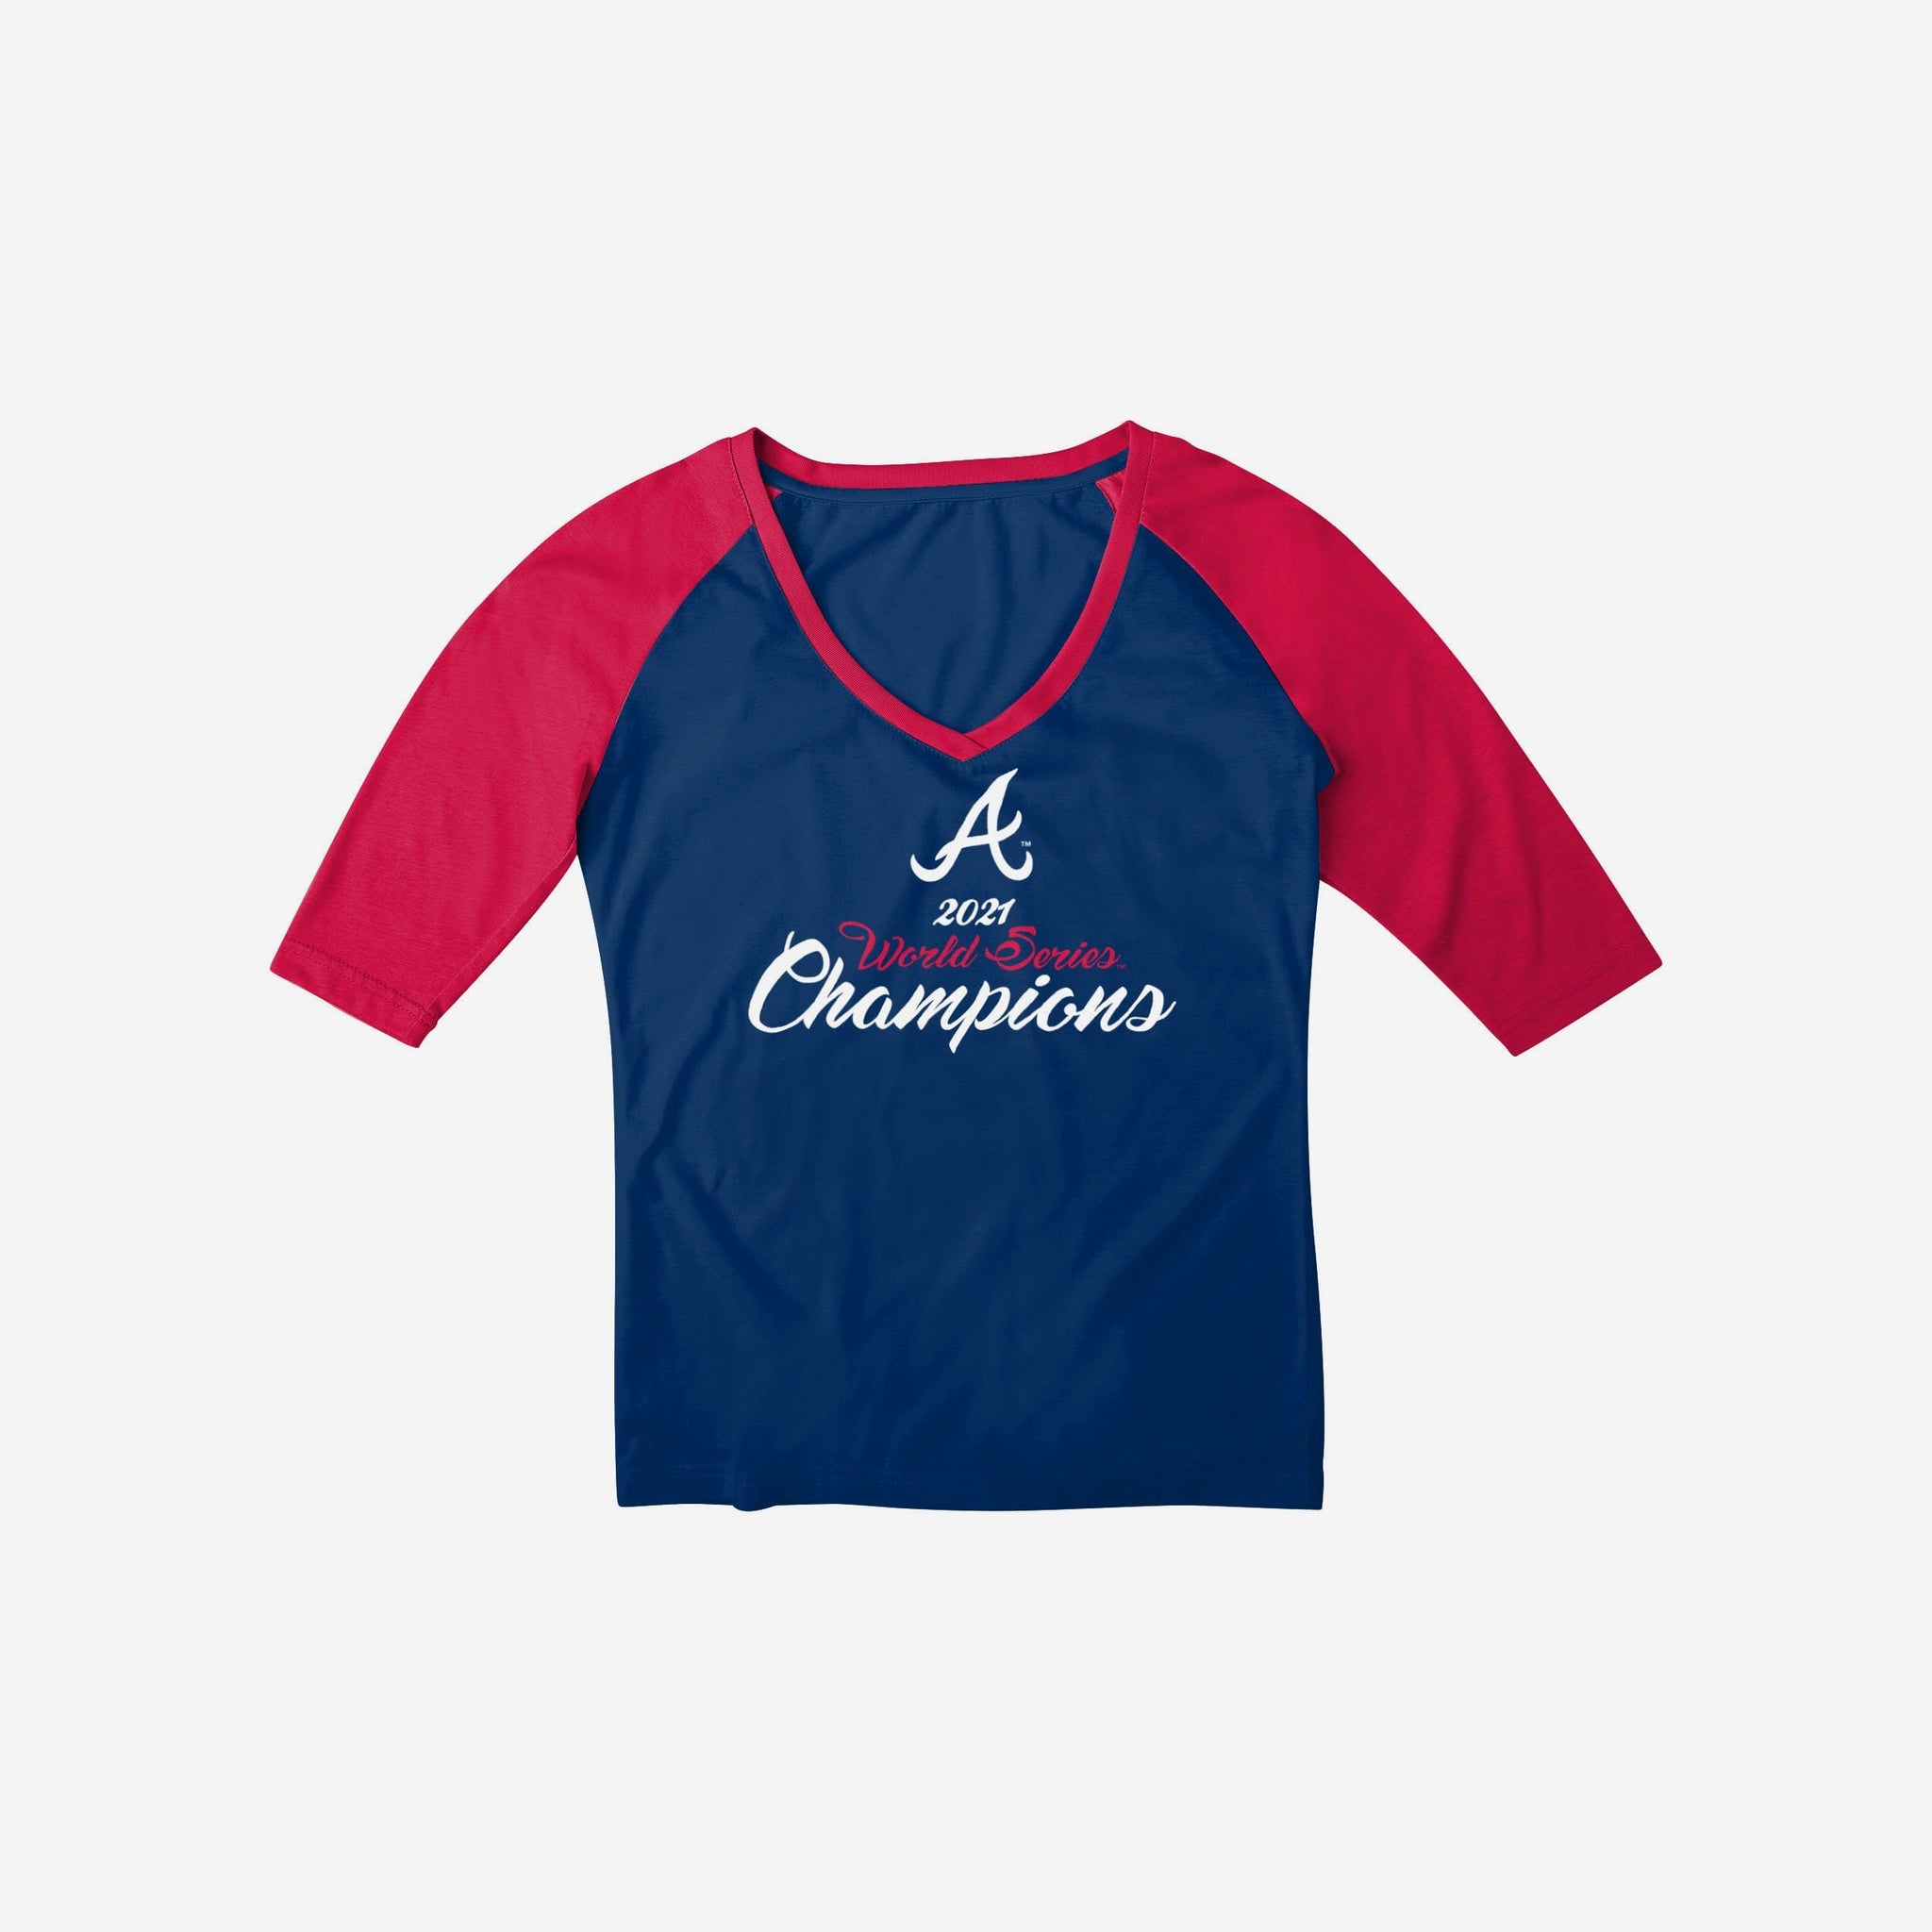 FOCO Atlanta Braves Apparel & Clothing Items. Officially Licensed